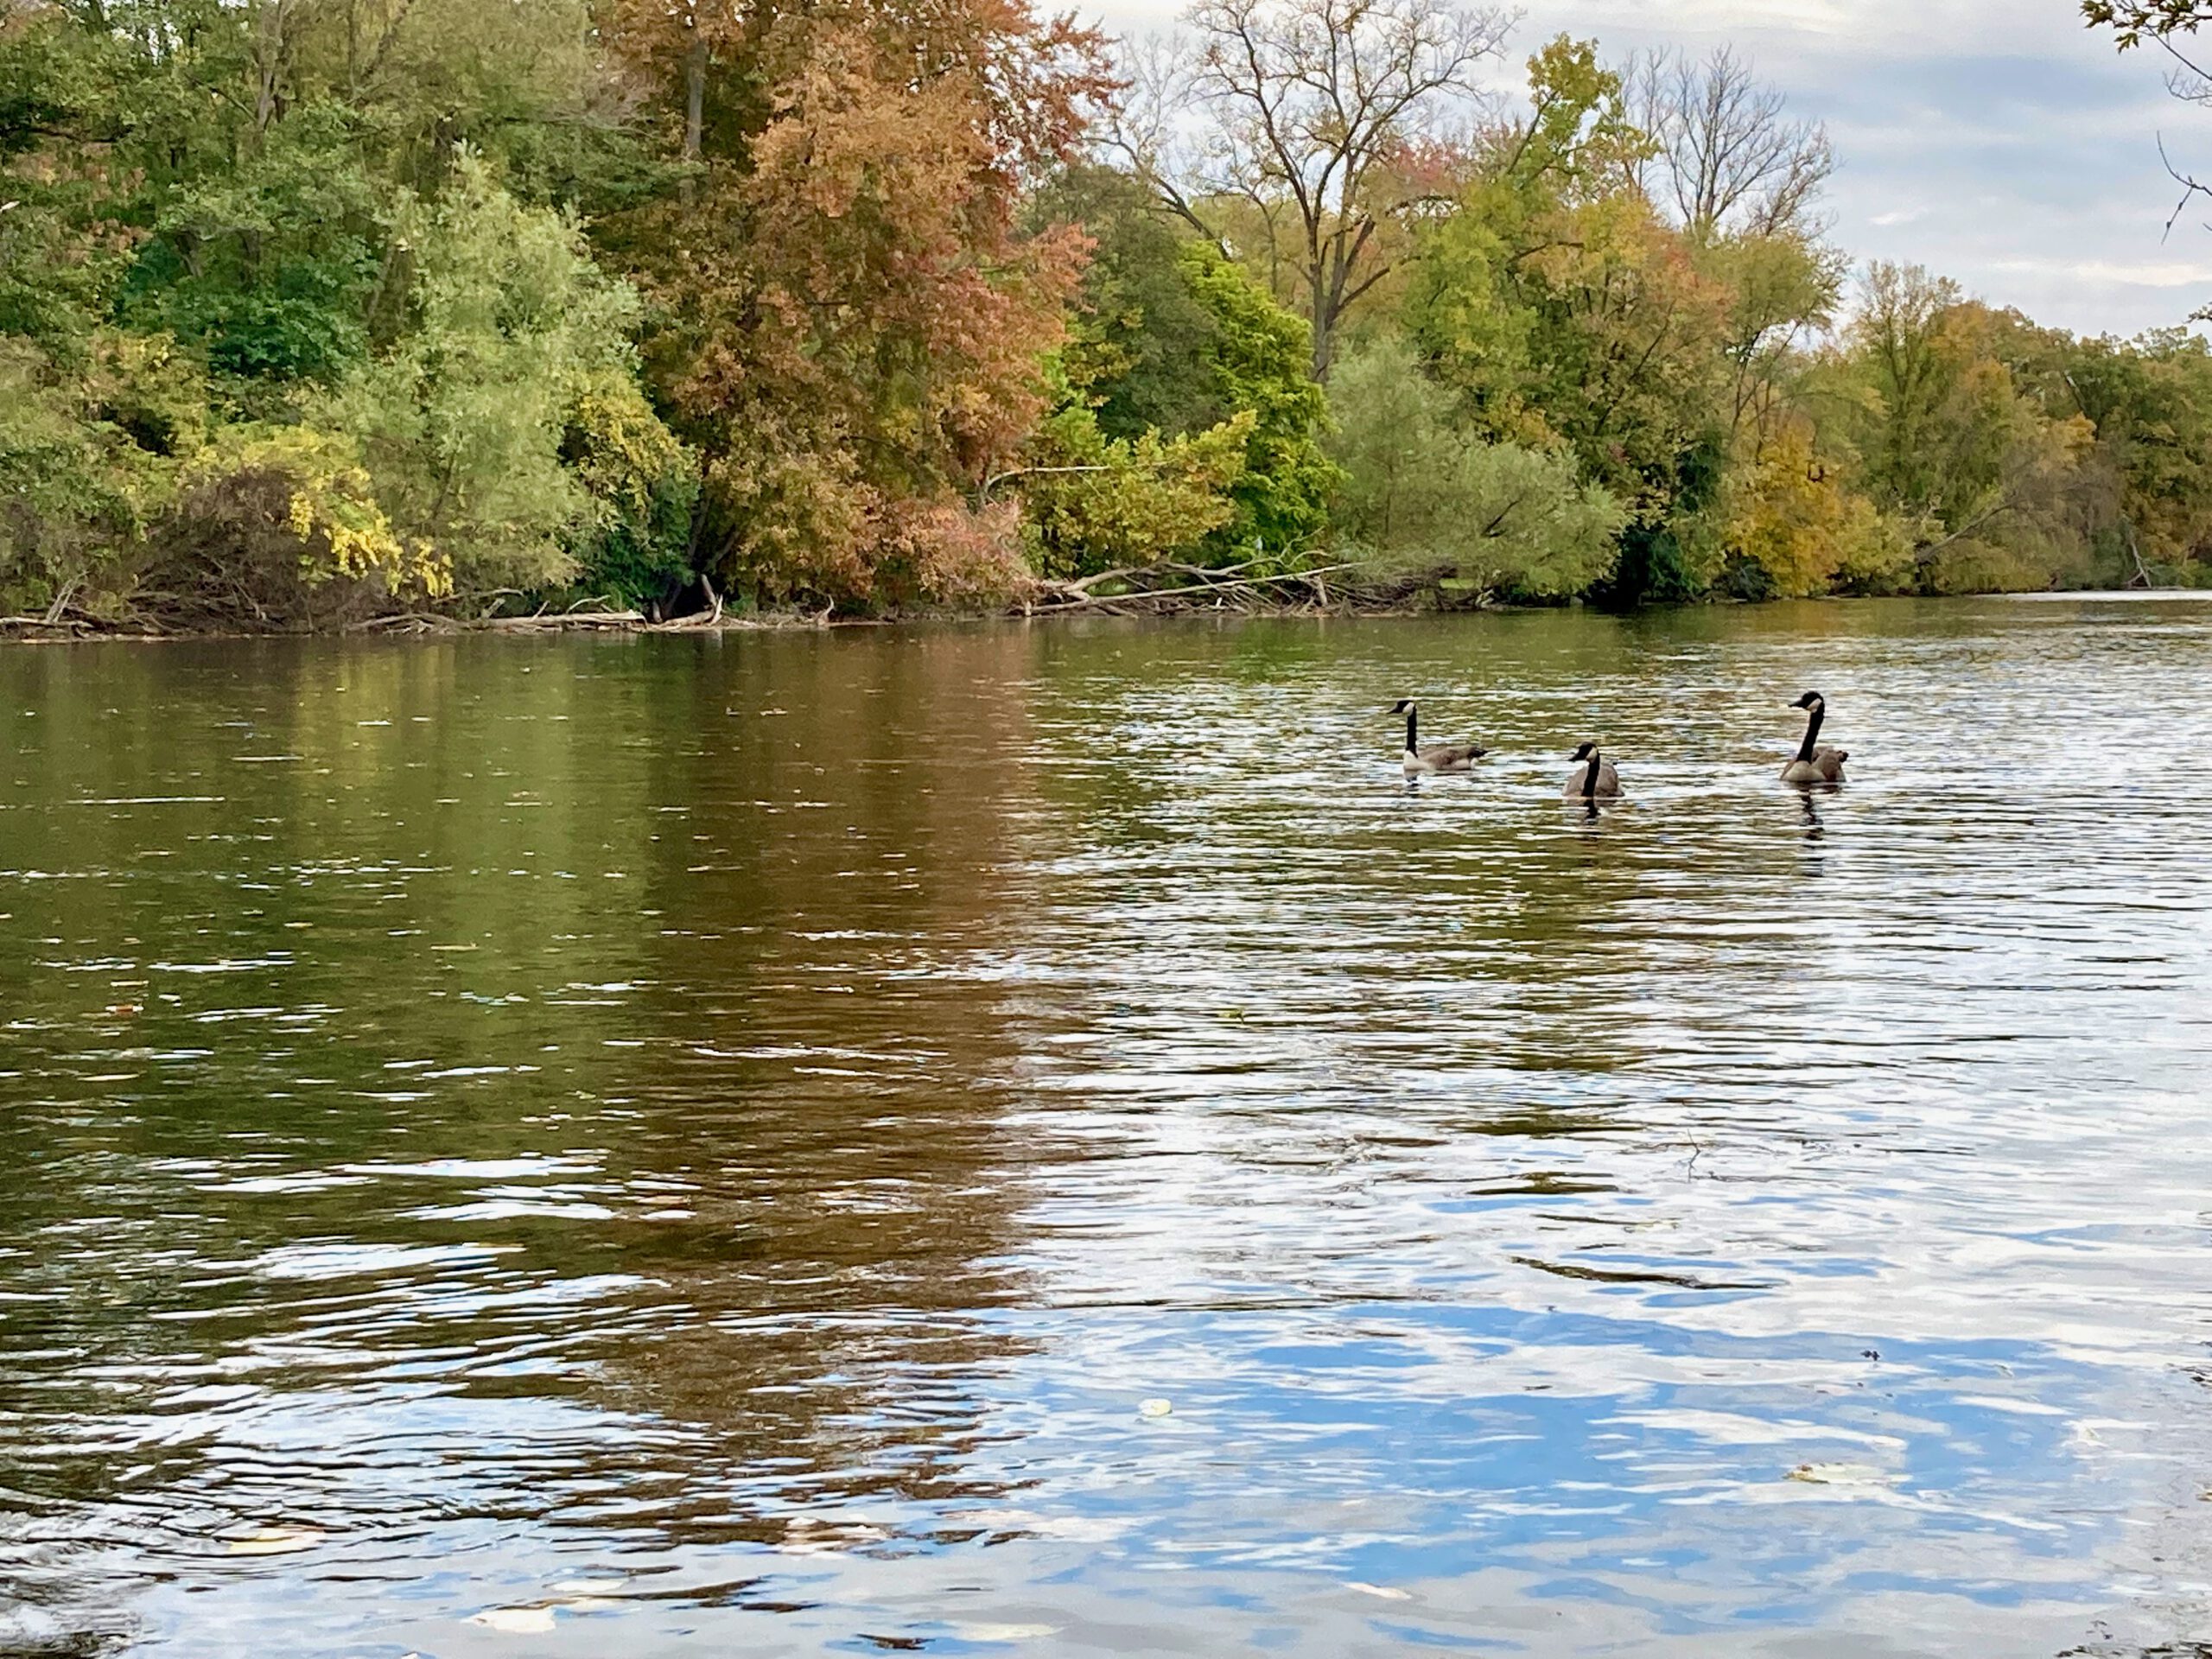 ducks paddling on the river